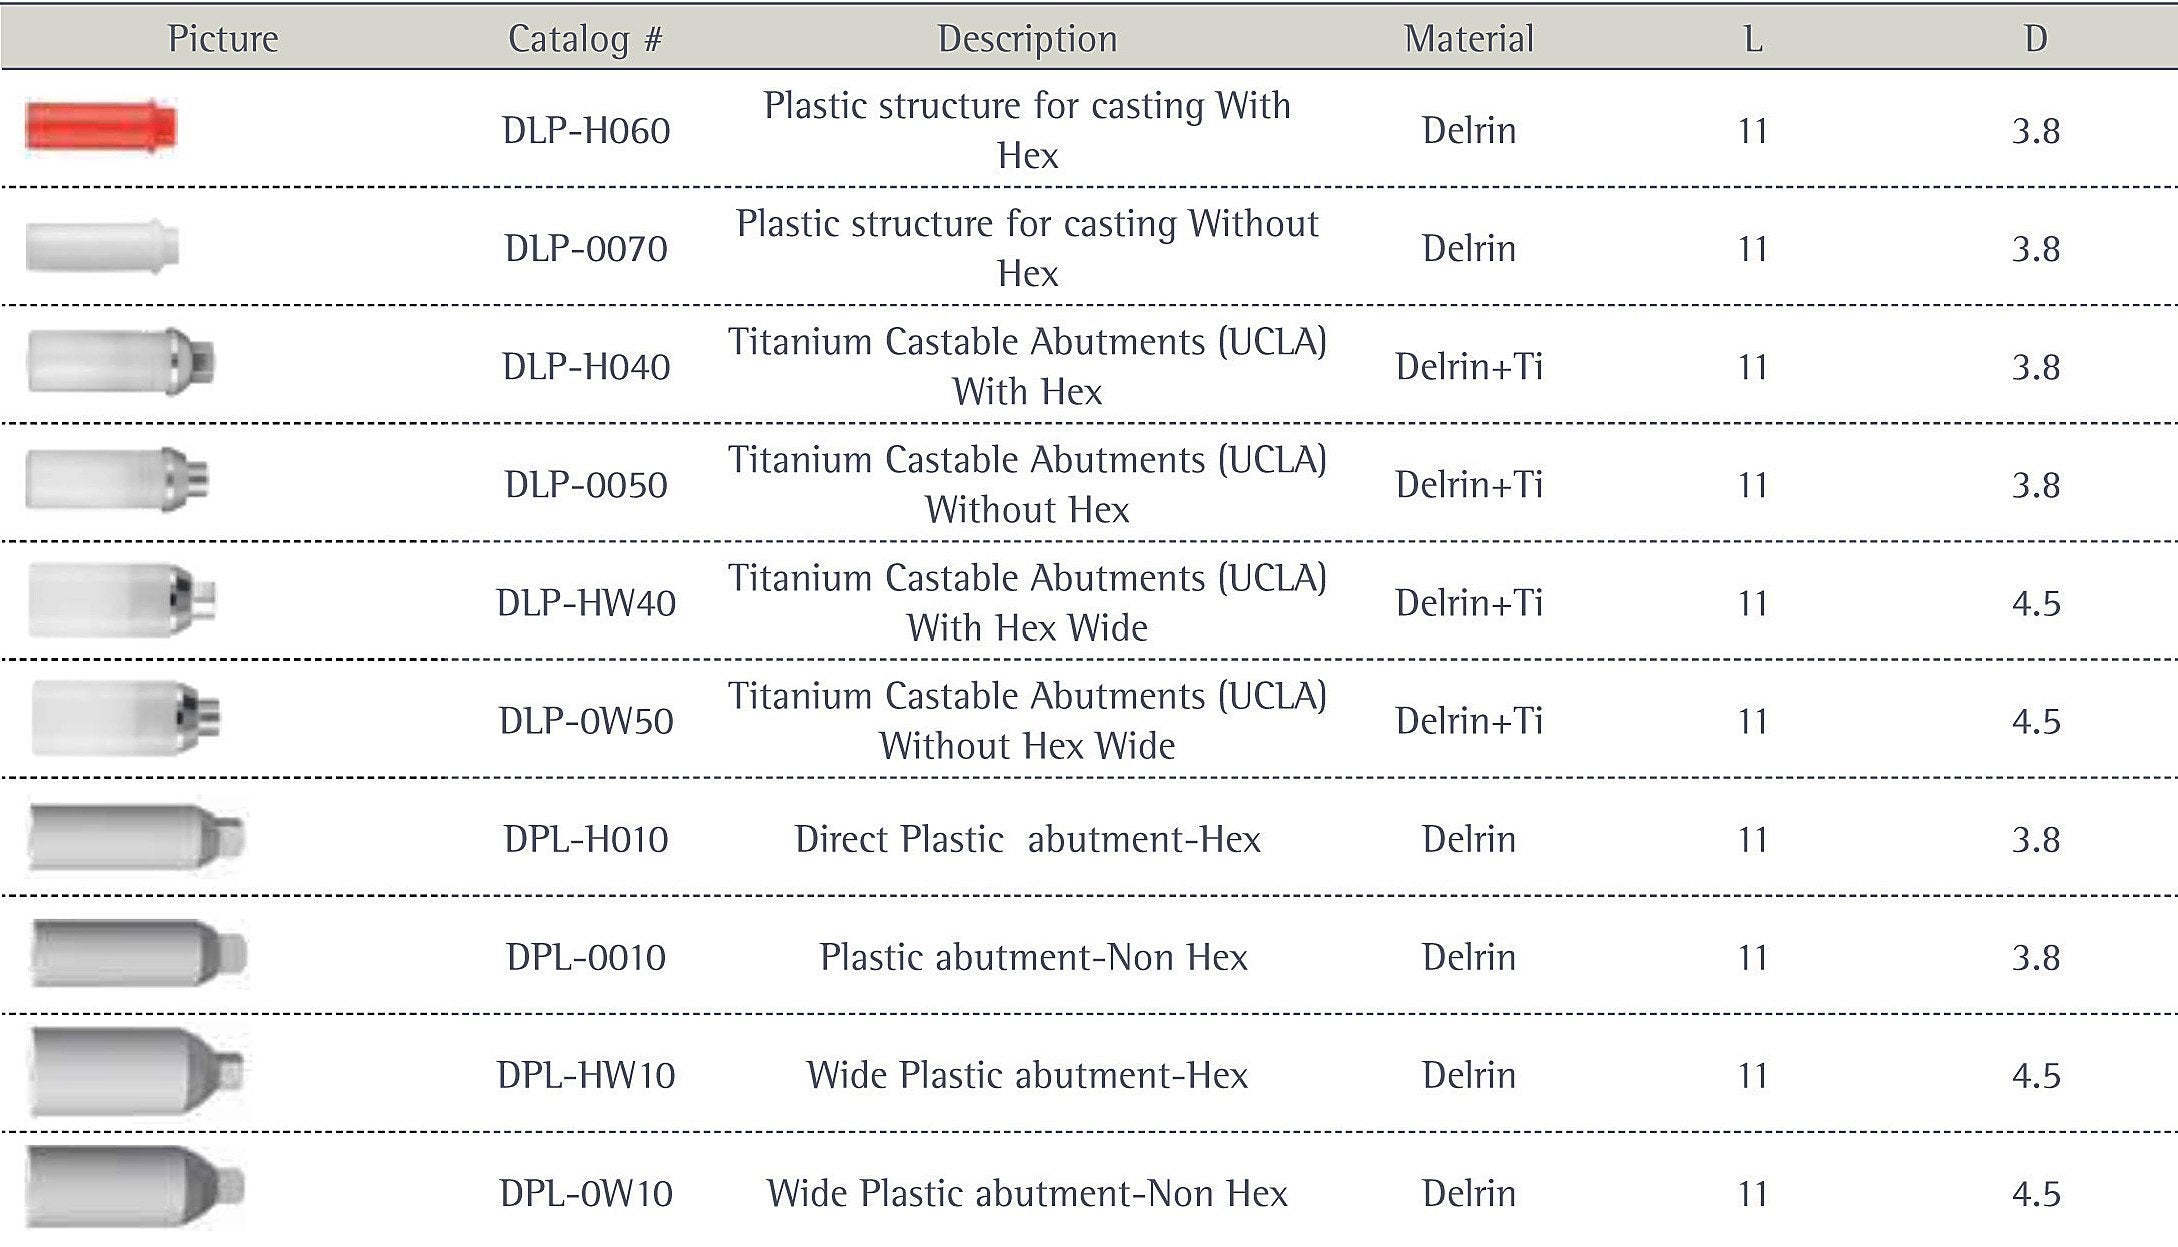 Titanium Castable Abutments (UCLA) Without Hex